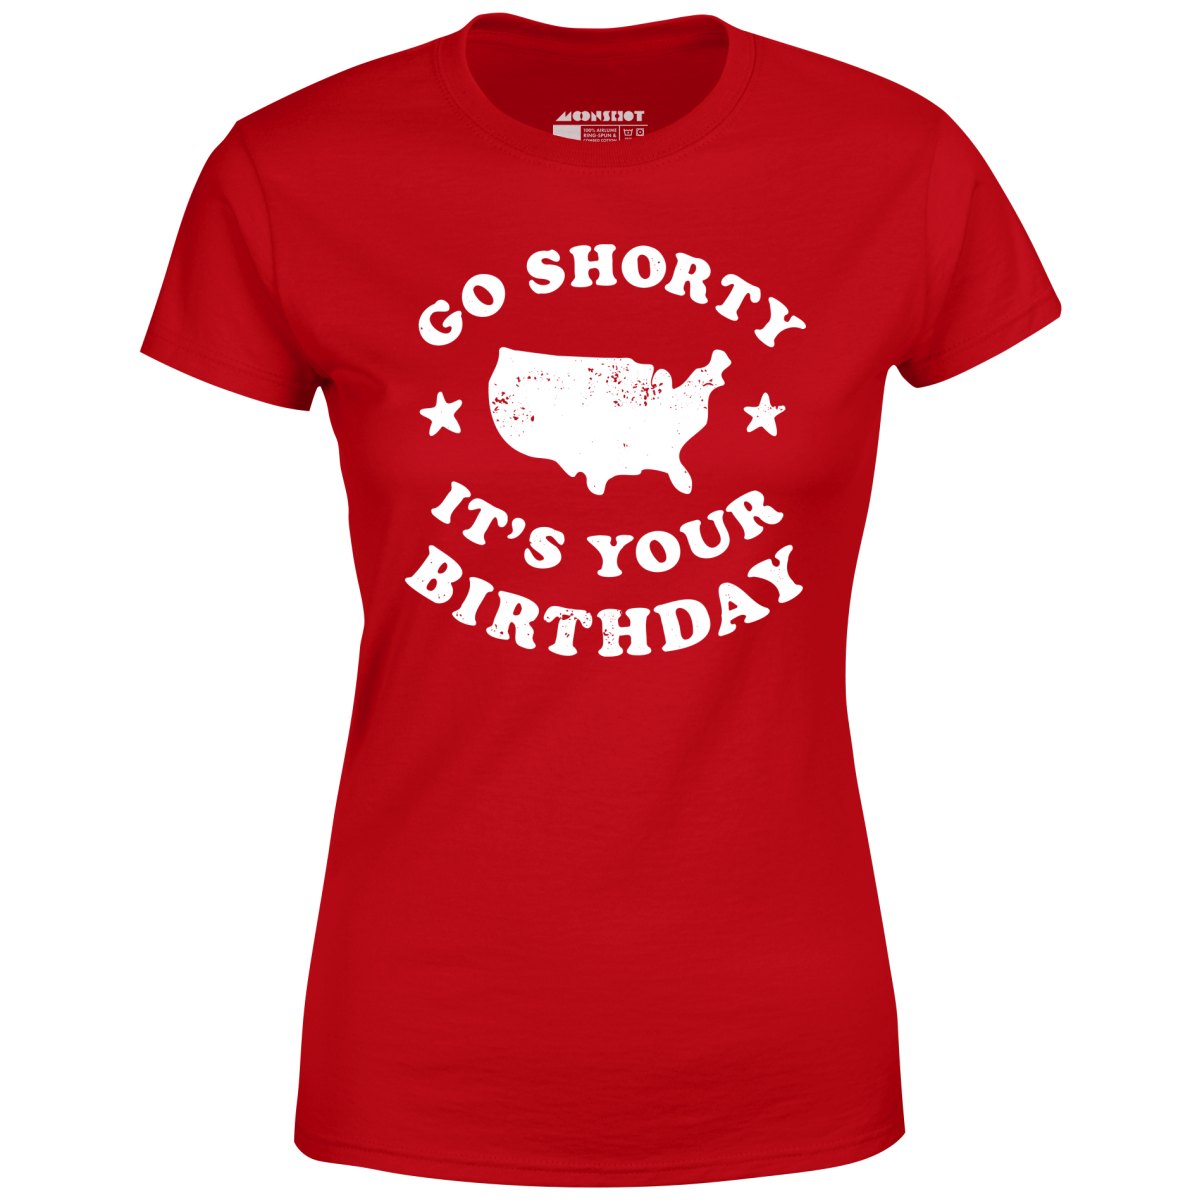 Go Shorty It's Your Birthday - Women's T-Shirt